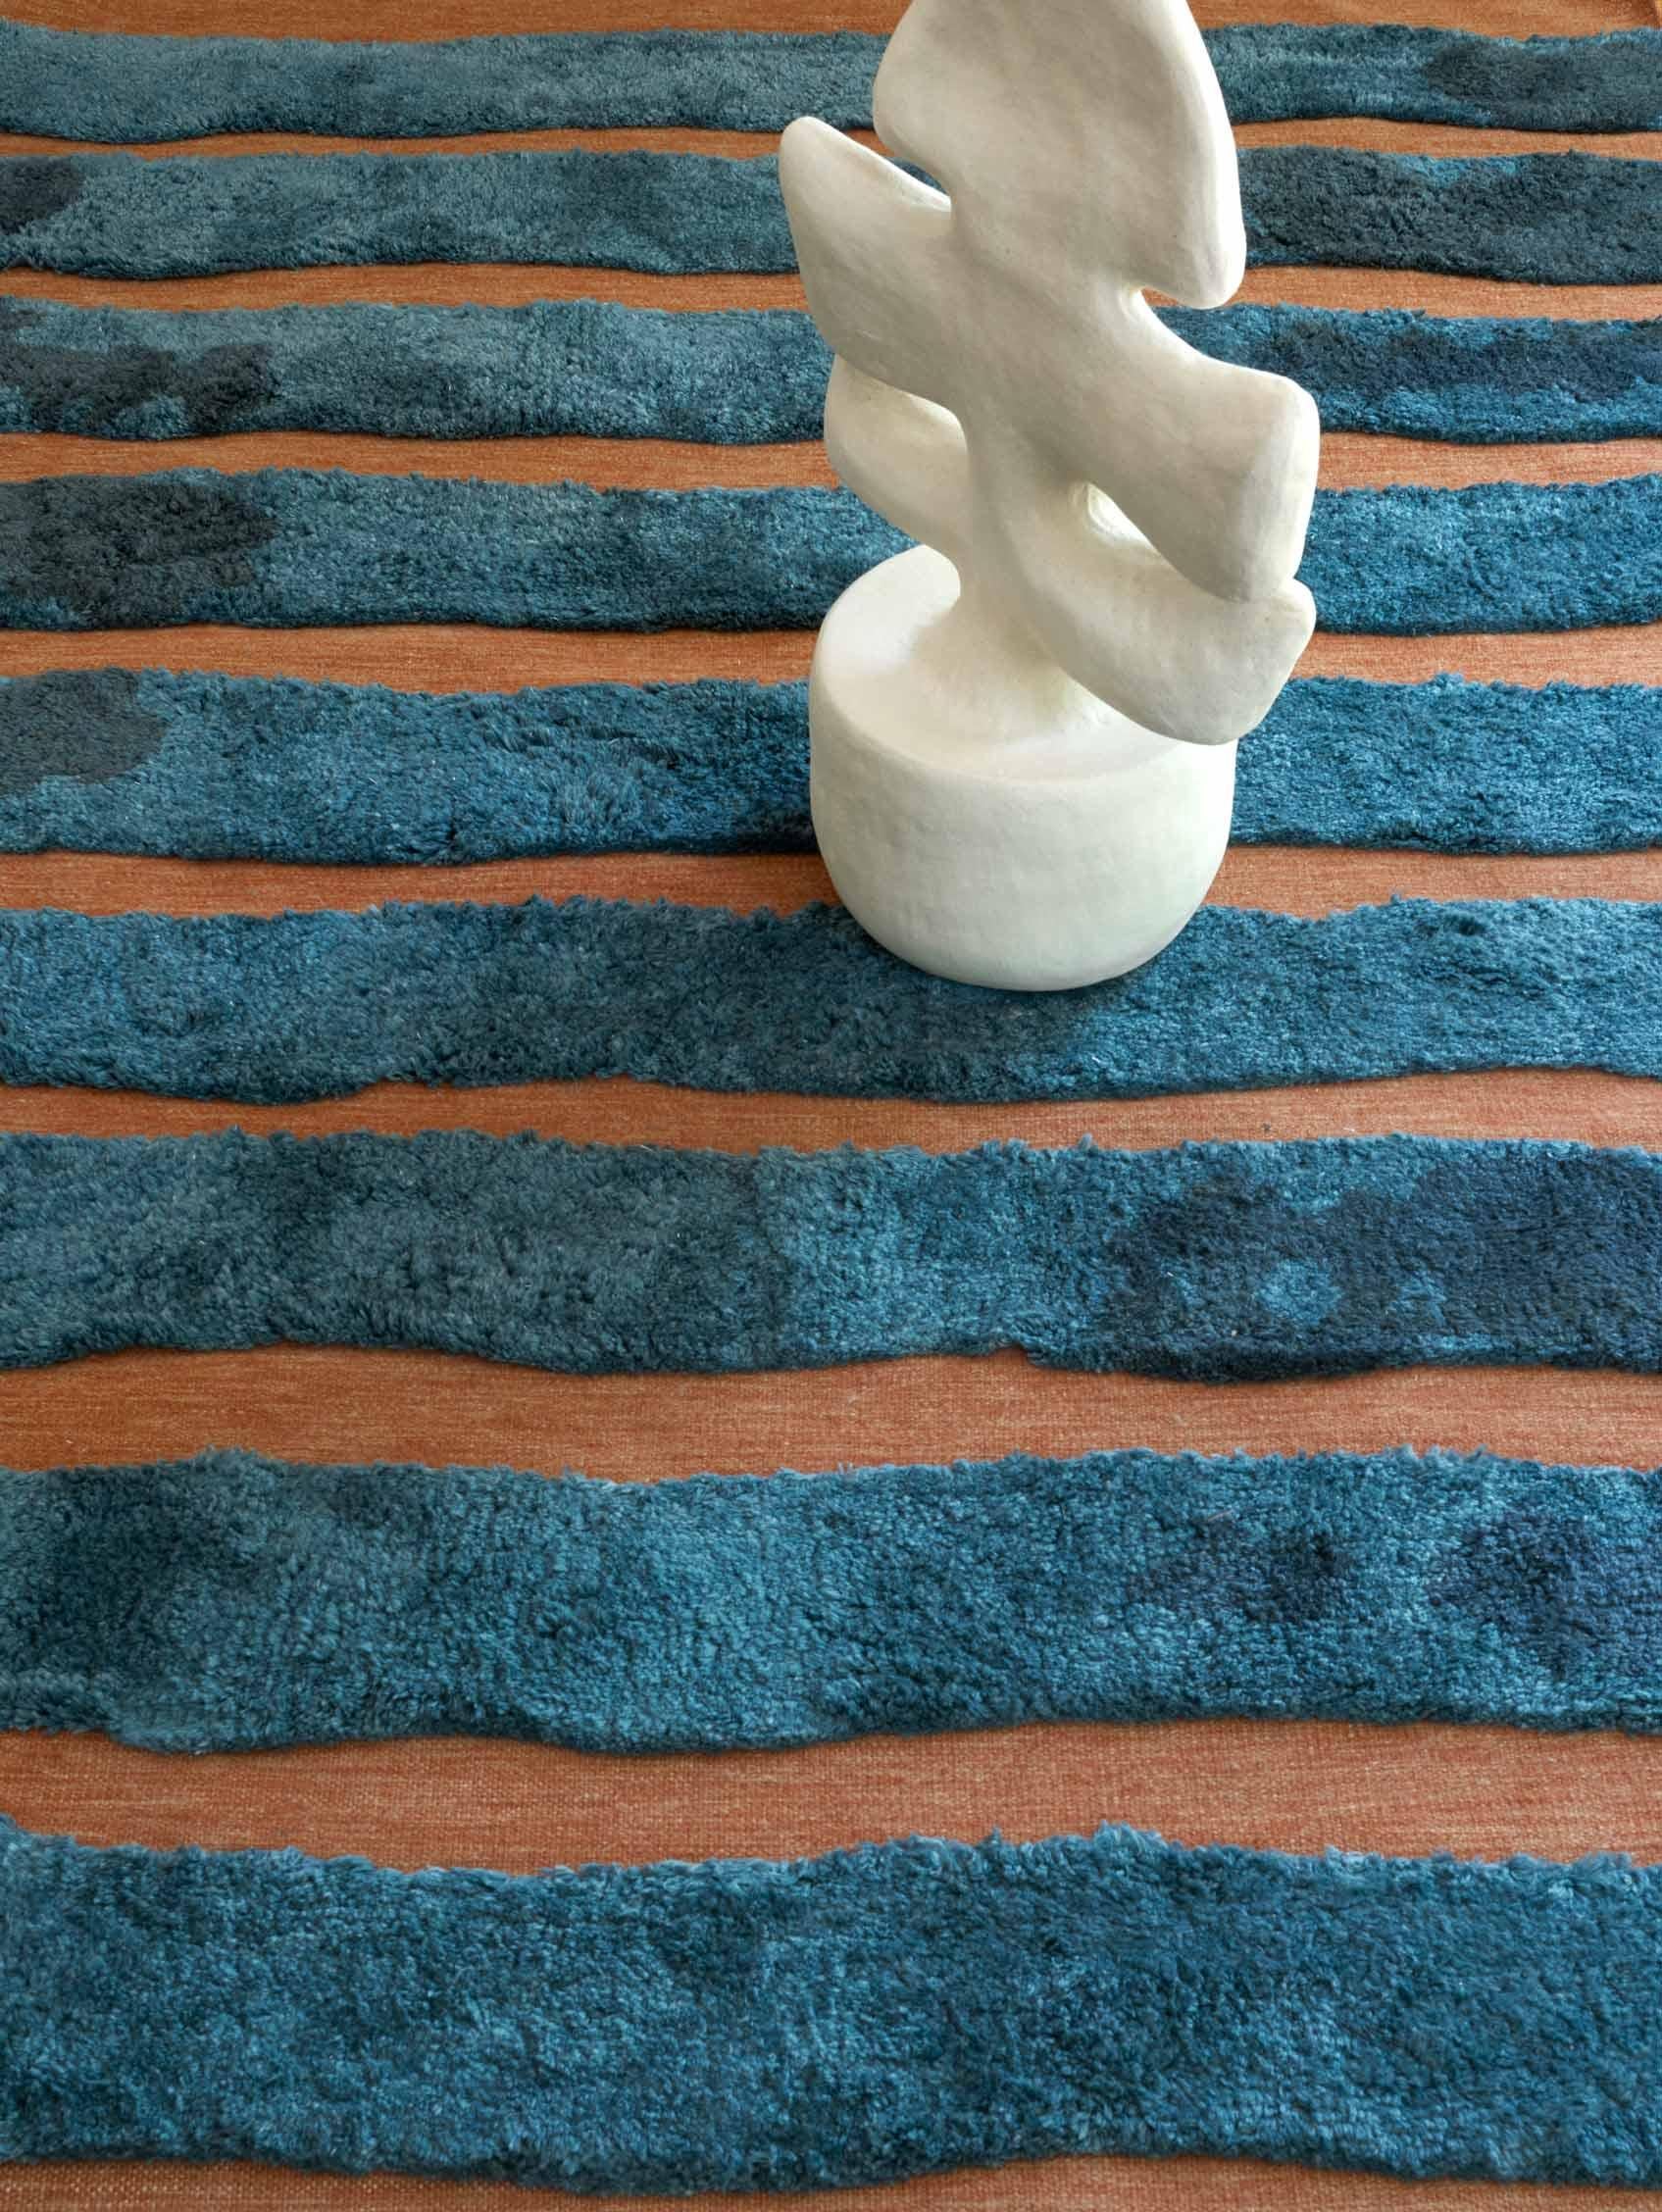 Muster des Teppichs: Bold Stripe - Isthmus
MATERIAL: Merino Wool Pile/ New Zealand Wool Flat-weave
Qualität: Wolle Flachgewebe & marokkanischer Flor, 10mm Flor, handgewebt 
Größe: 5'-0